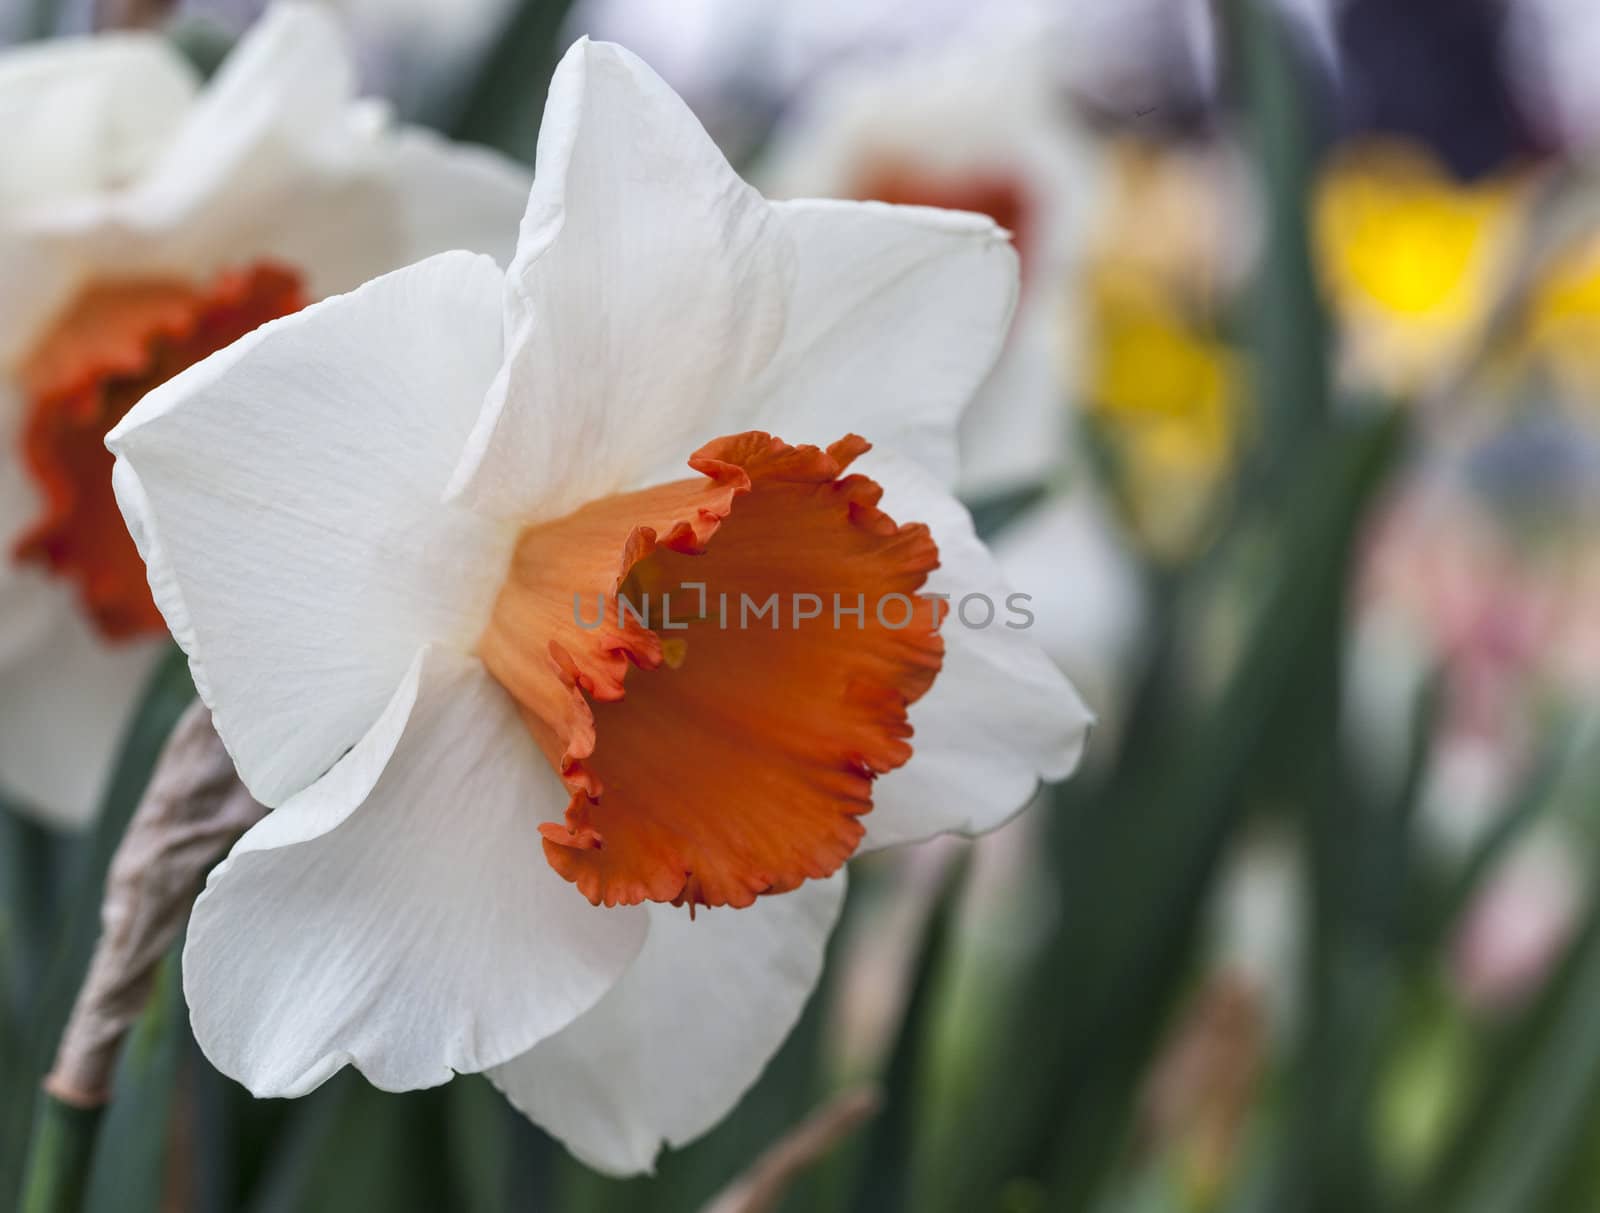 Daffodil by RazvanPhotography